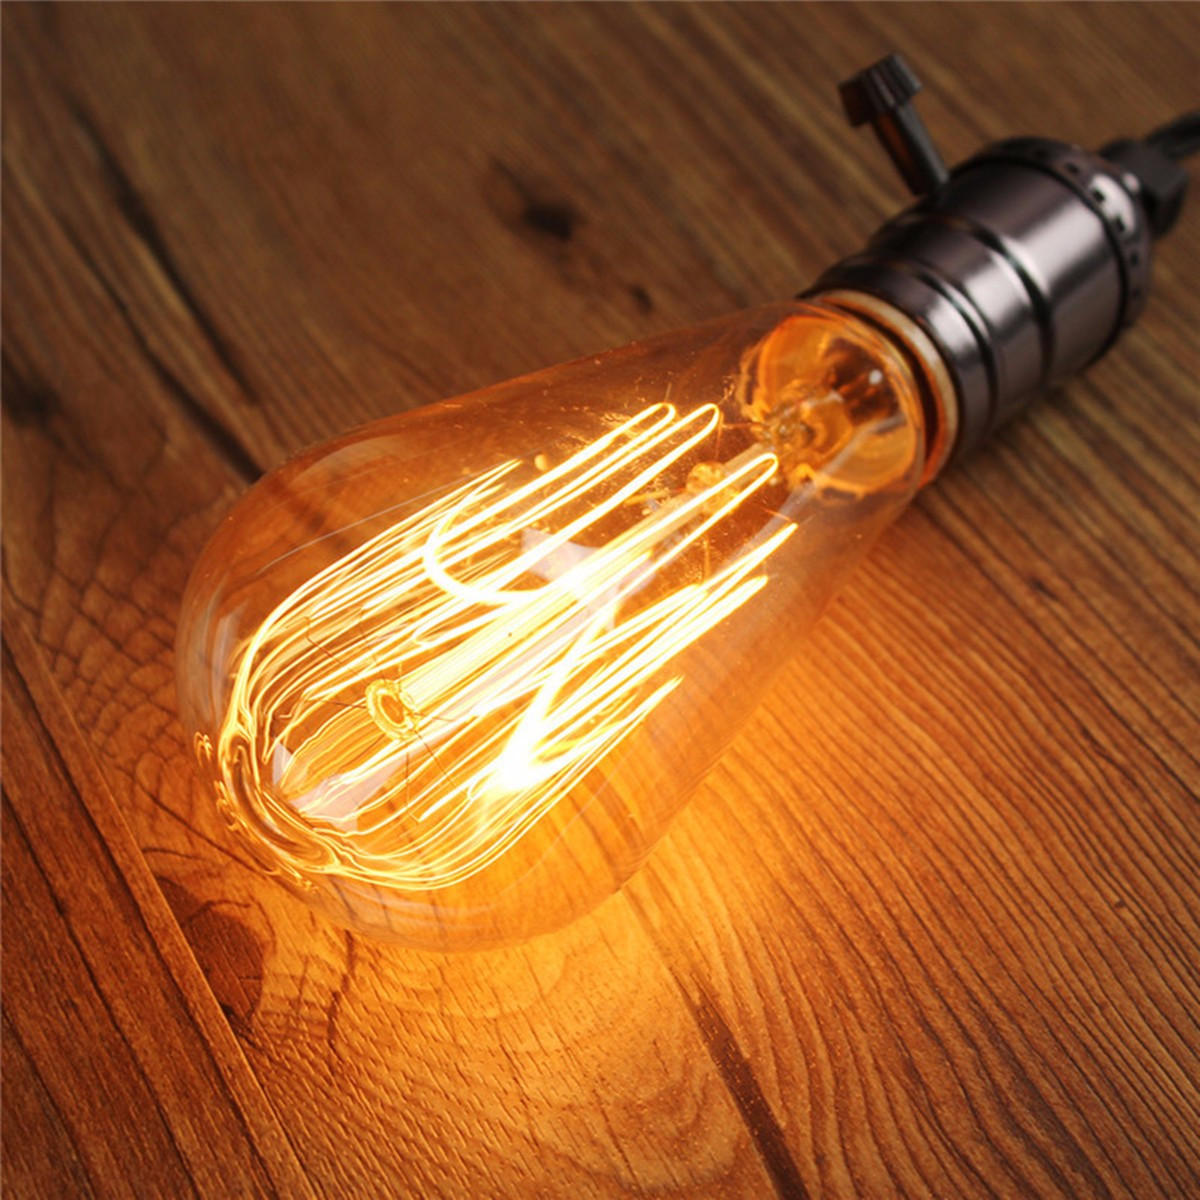 

Kingso E27 40W ST64 A19 Edison Vintage Incandescent Light Bulb Nostalgia Filament Lamp AC220V